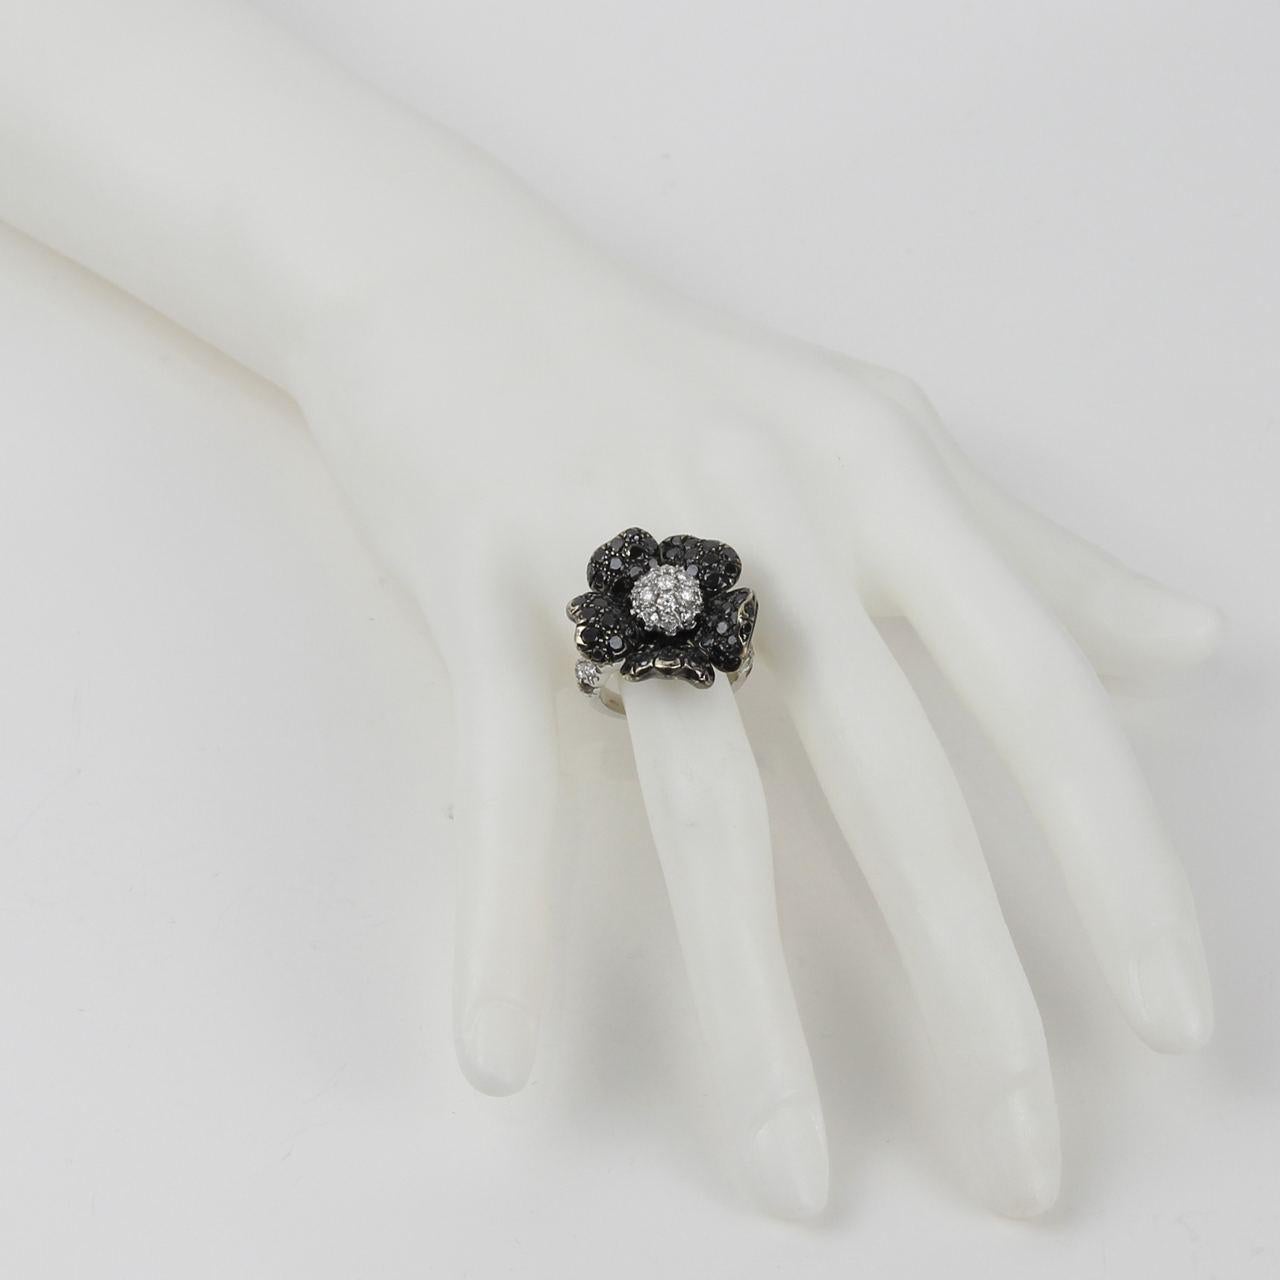 Diamonds: 1.75cts

Black Diamonds: 3.30cts

Ring Size: 6.0